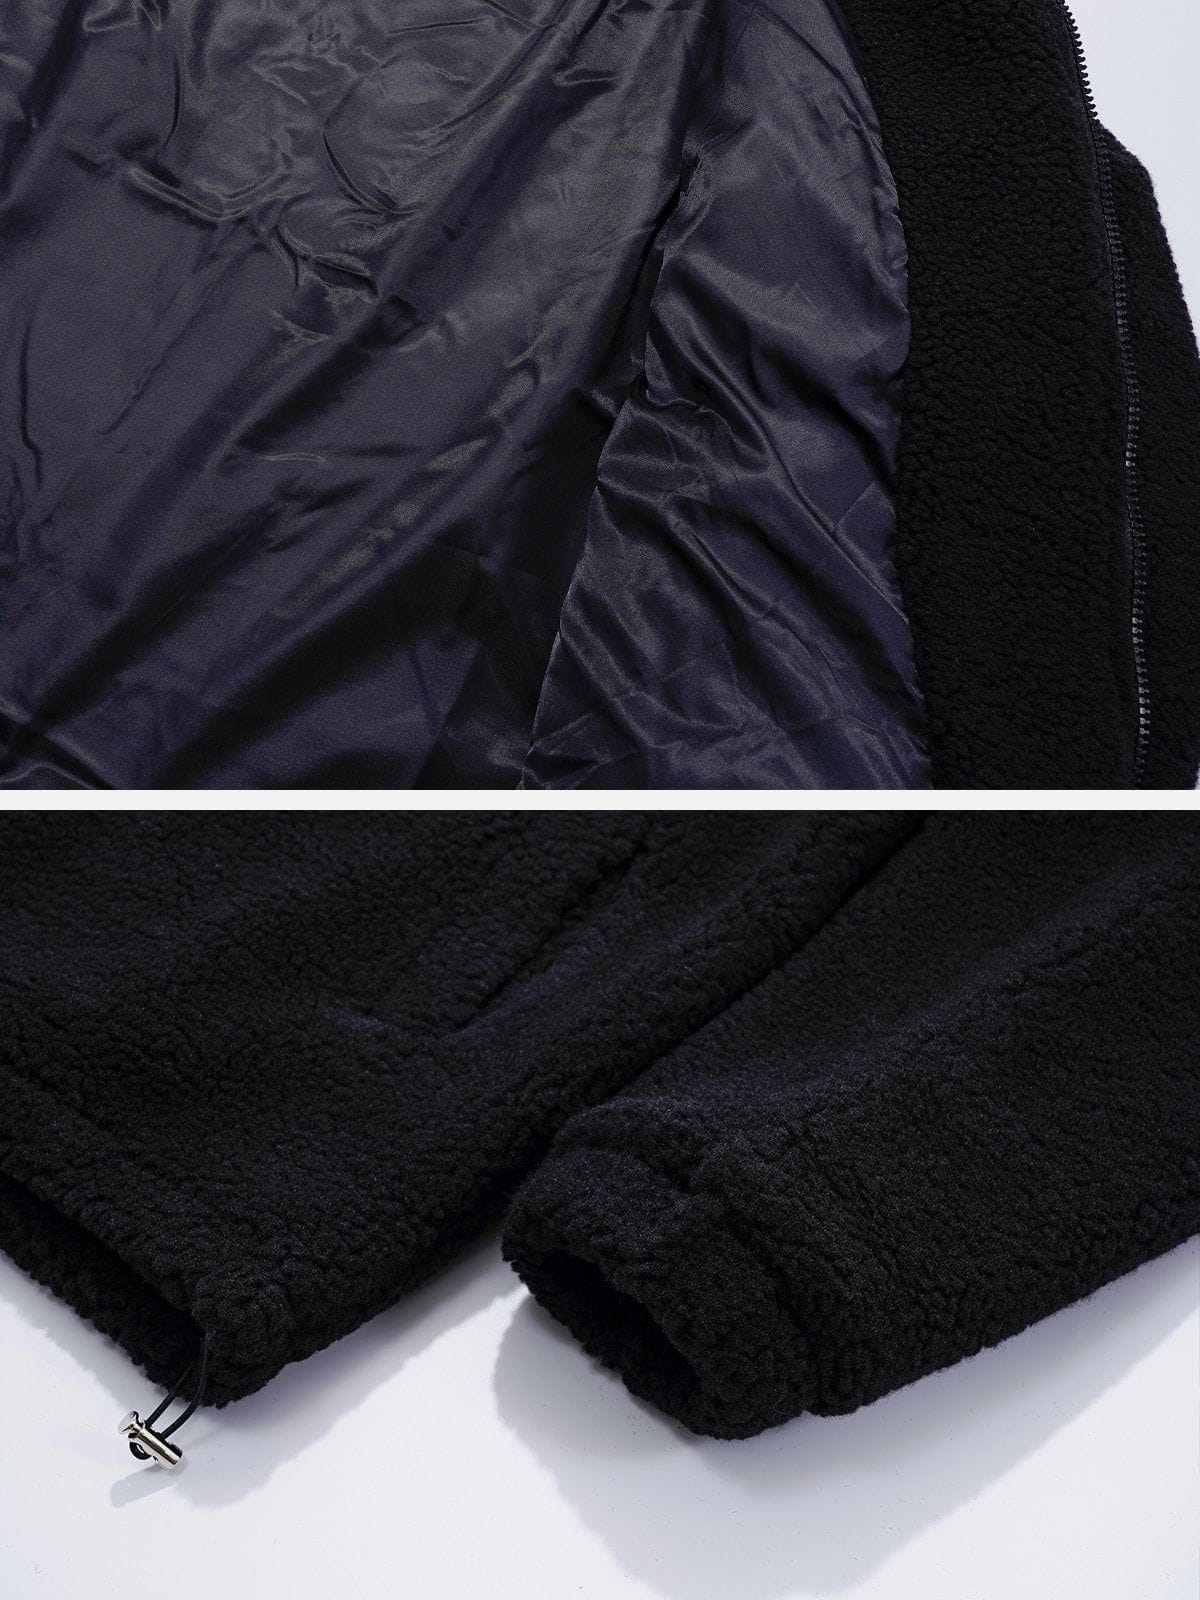 Majesda® - STREAM Embroidered Sherpa Jacket outfit ideas, streetwear fashion - majesda.com